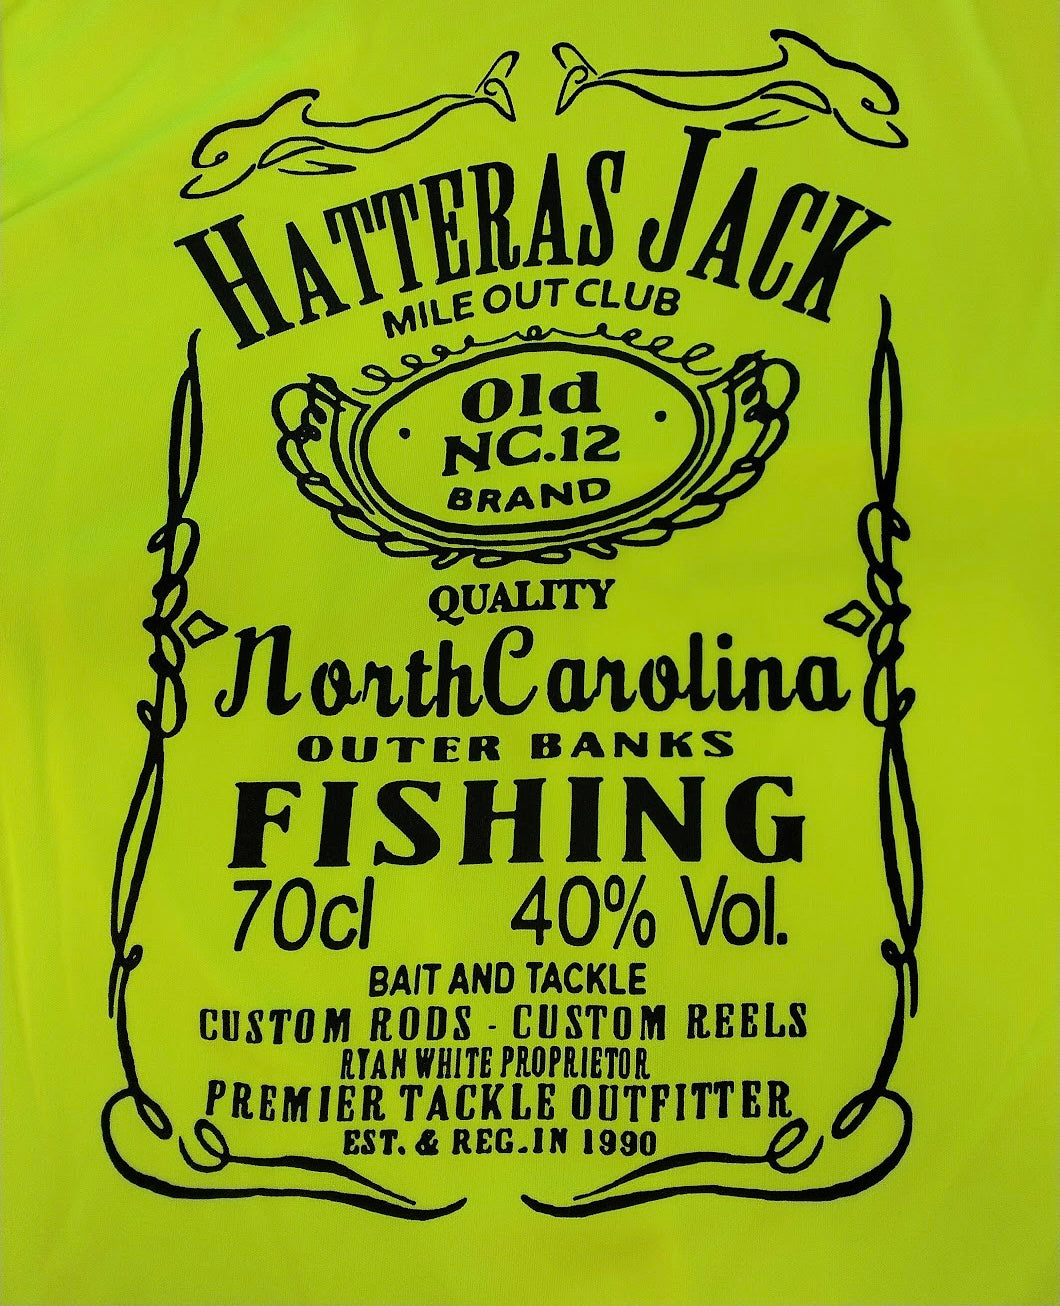 Hatteras Jack Performance Shirt 2021